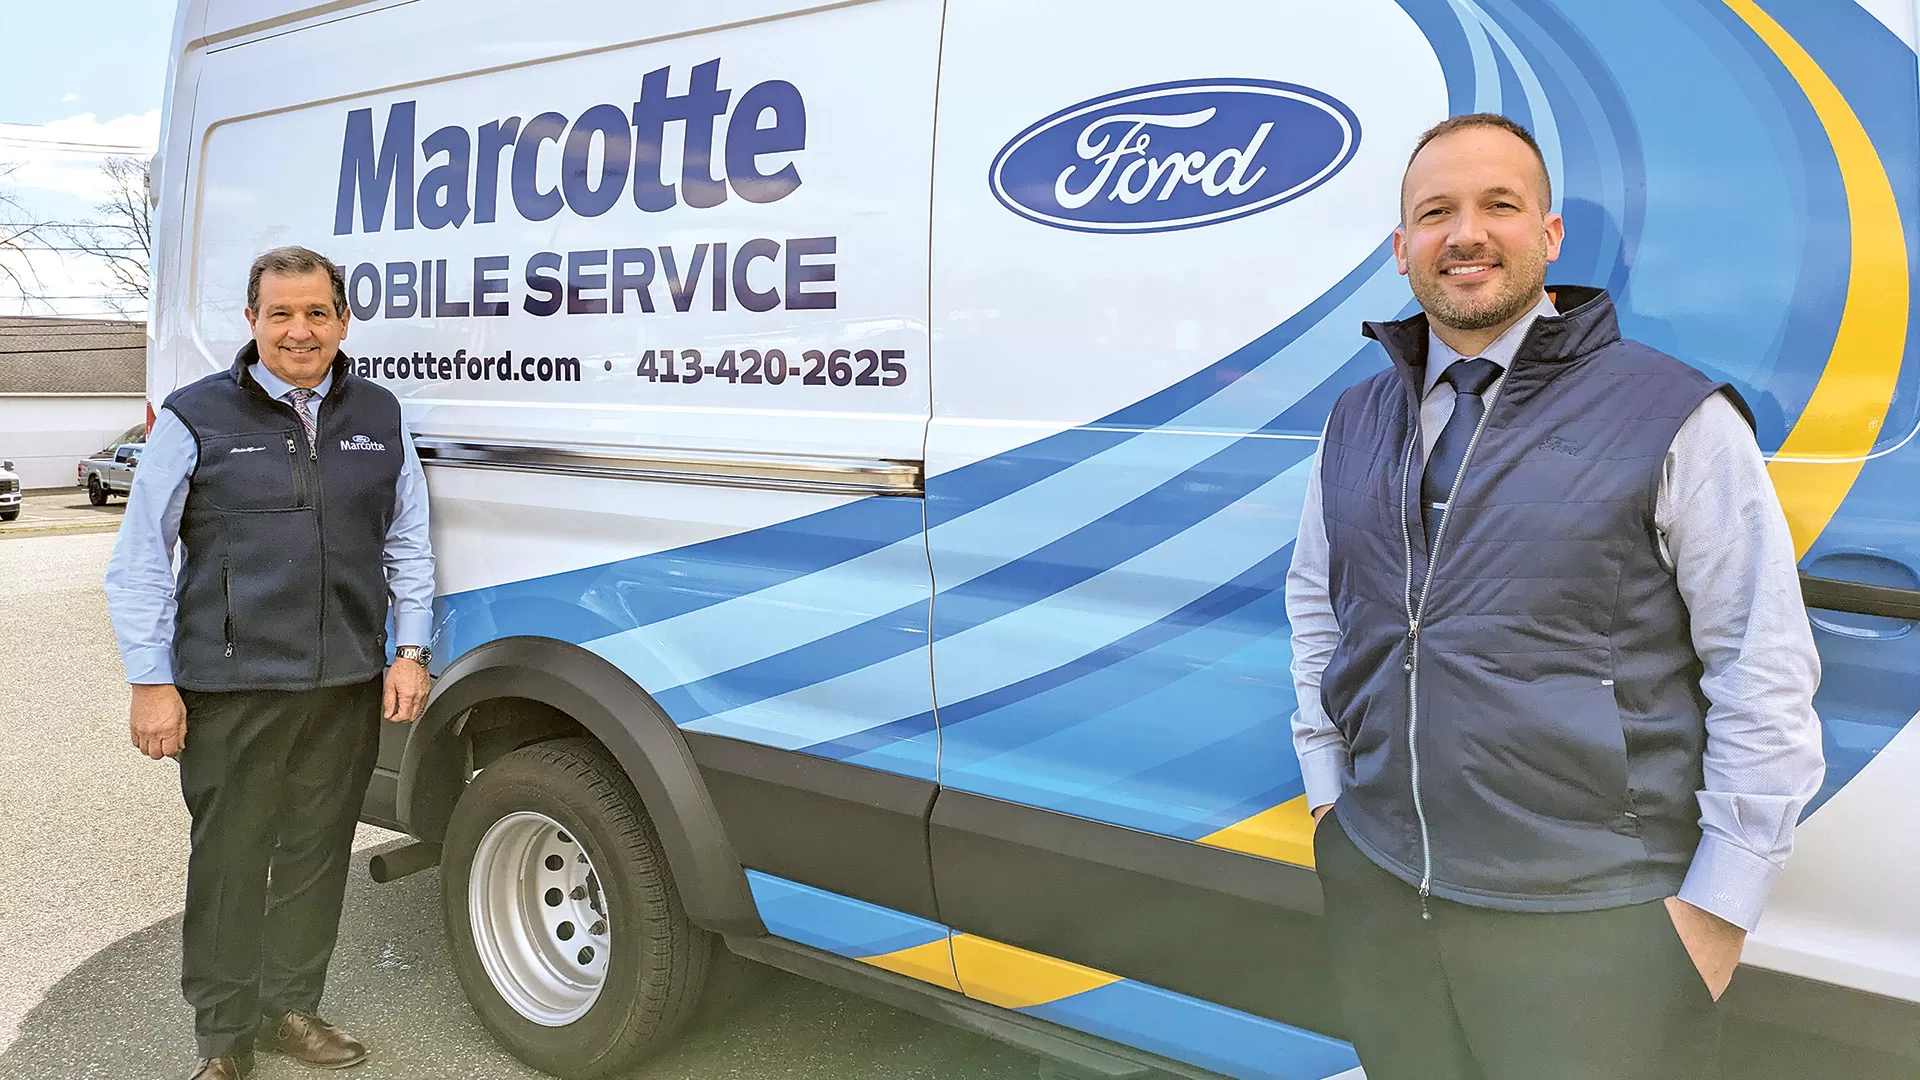 Marcotte Ford’s mobile service vans